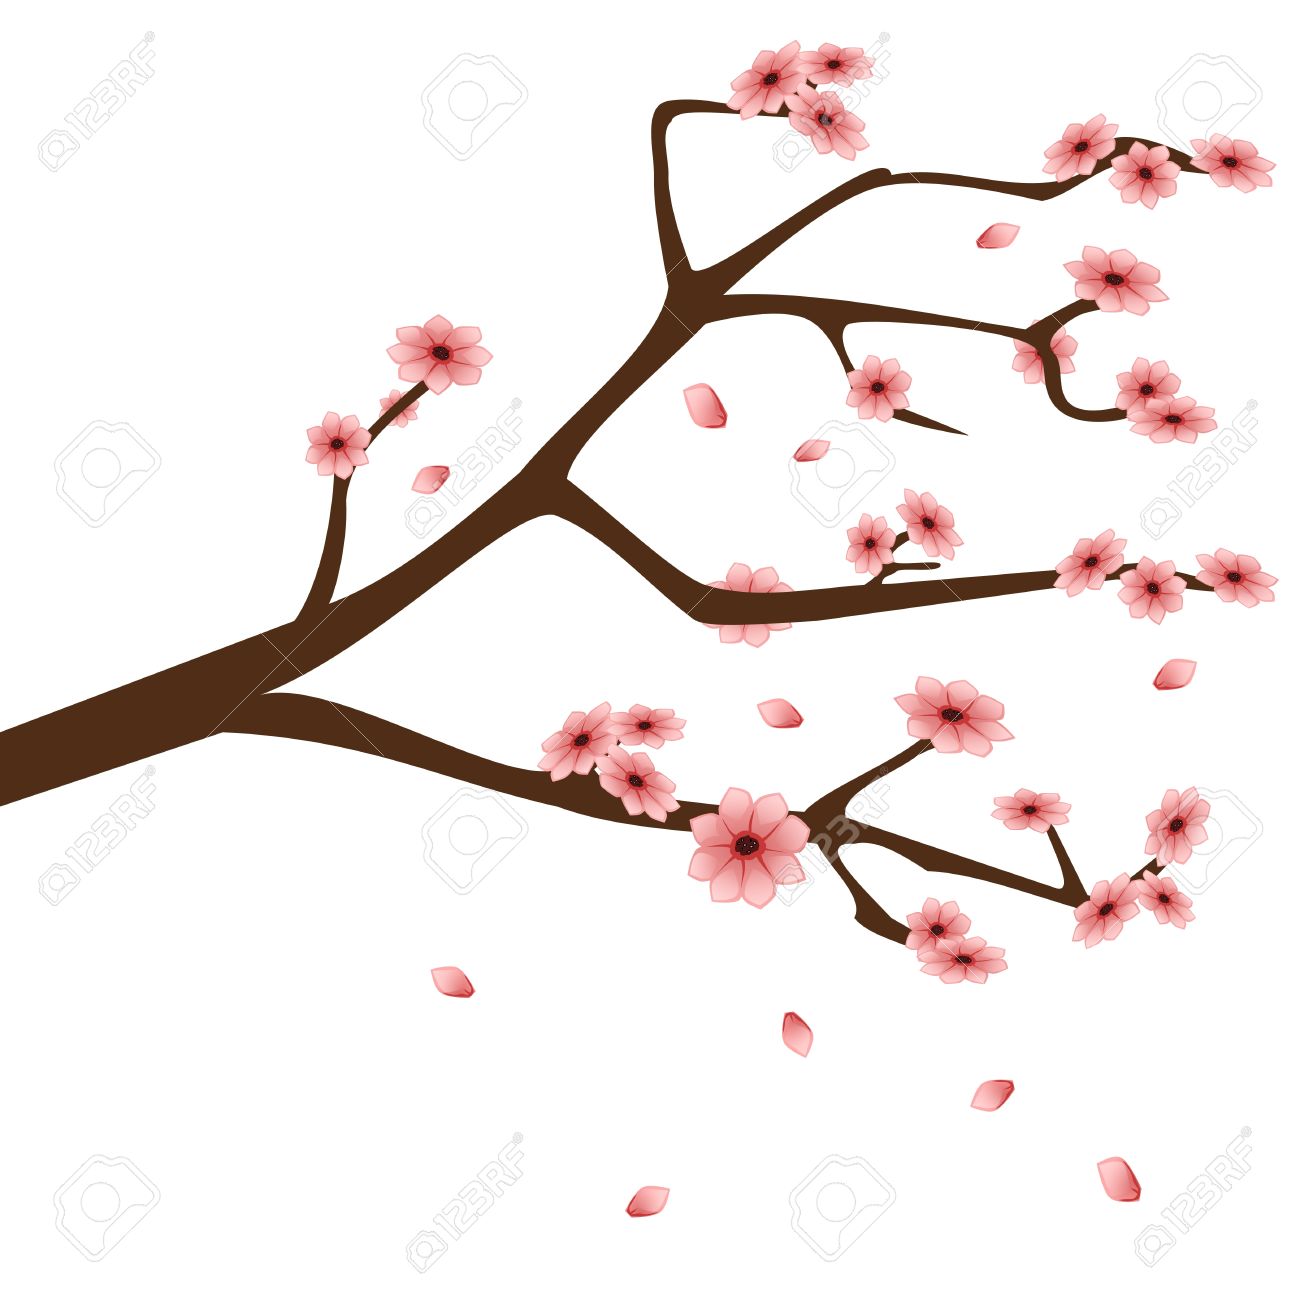 Almond blossom clipart - Clipground